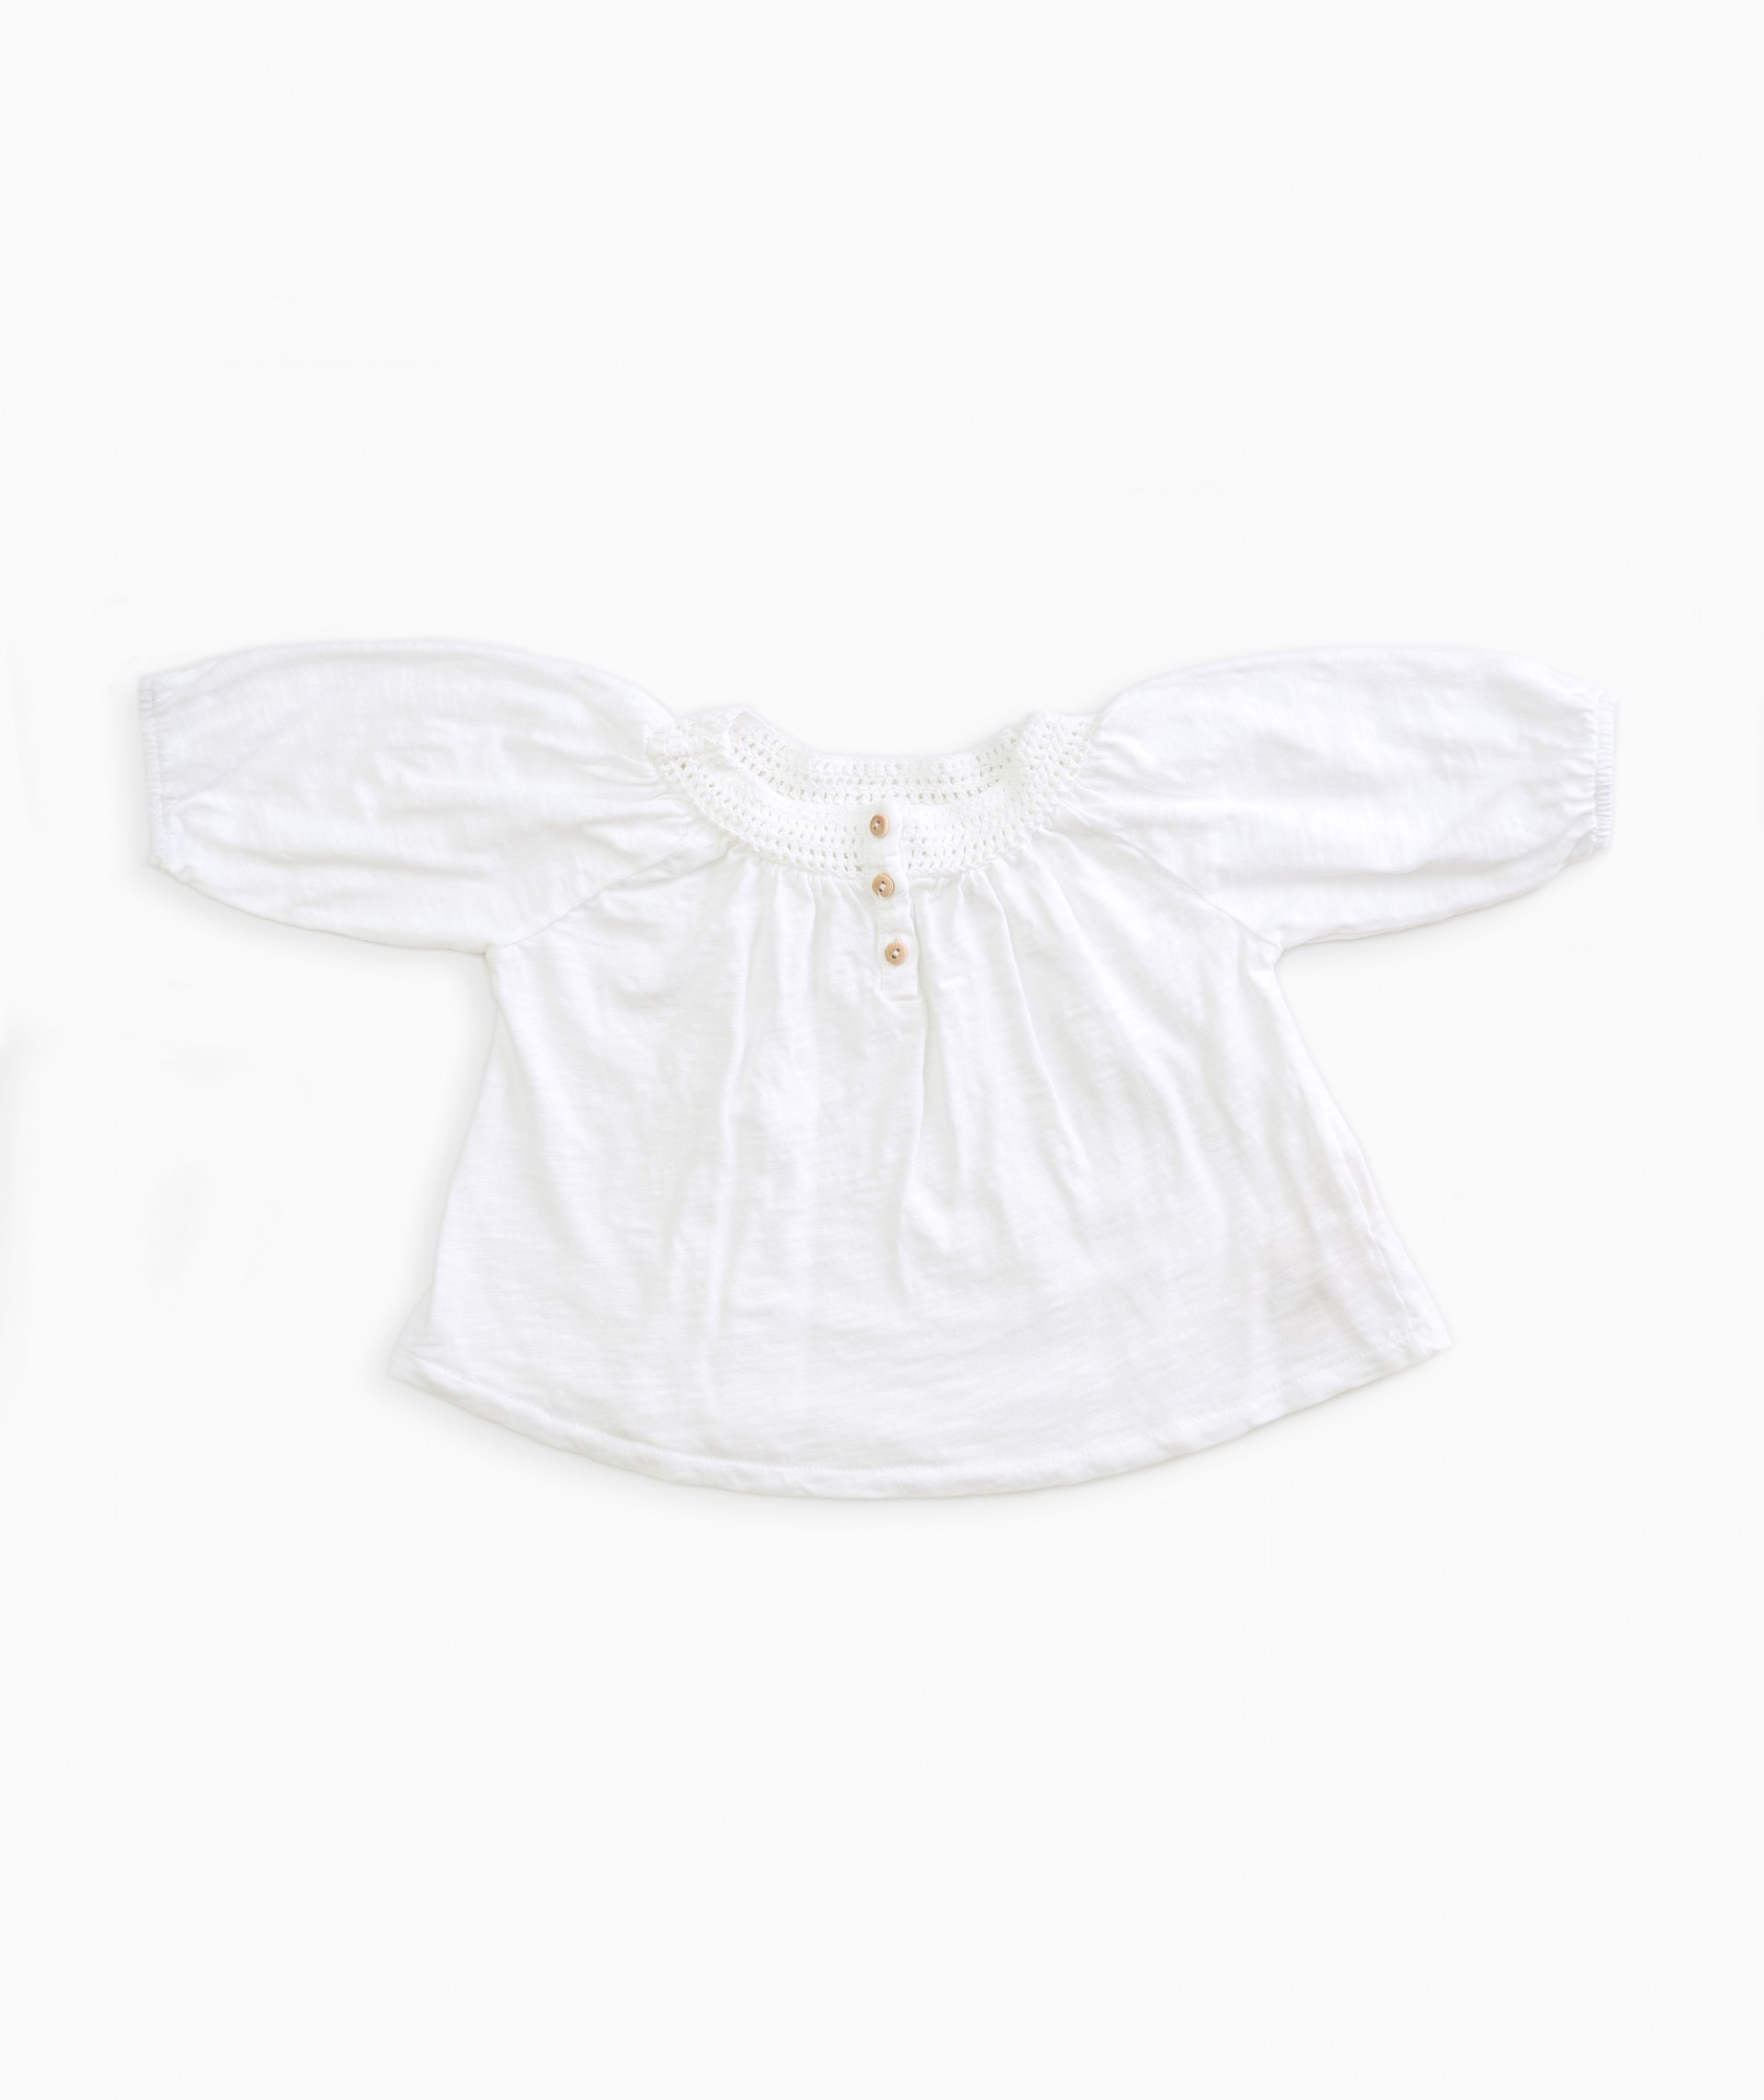 Long-sleeved t-shirt in organic cotton | Weaving